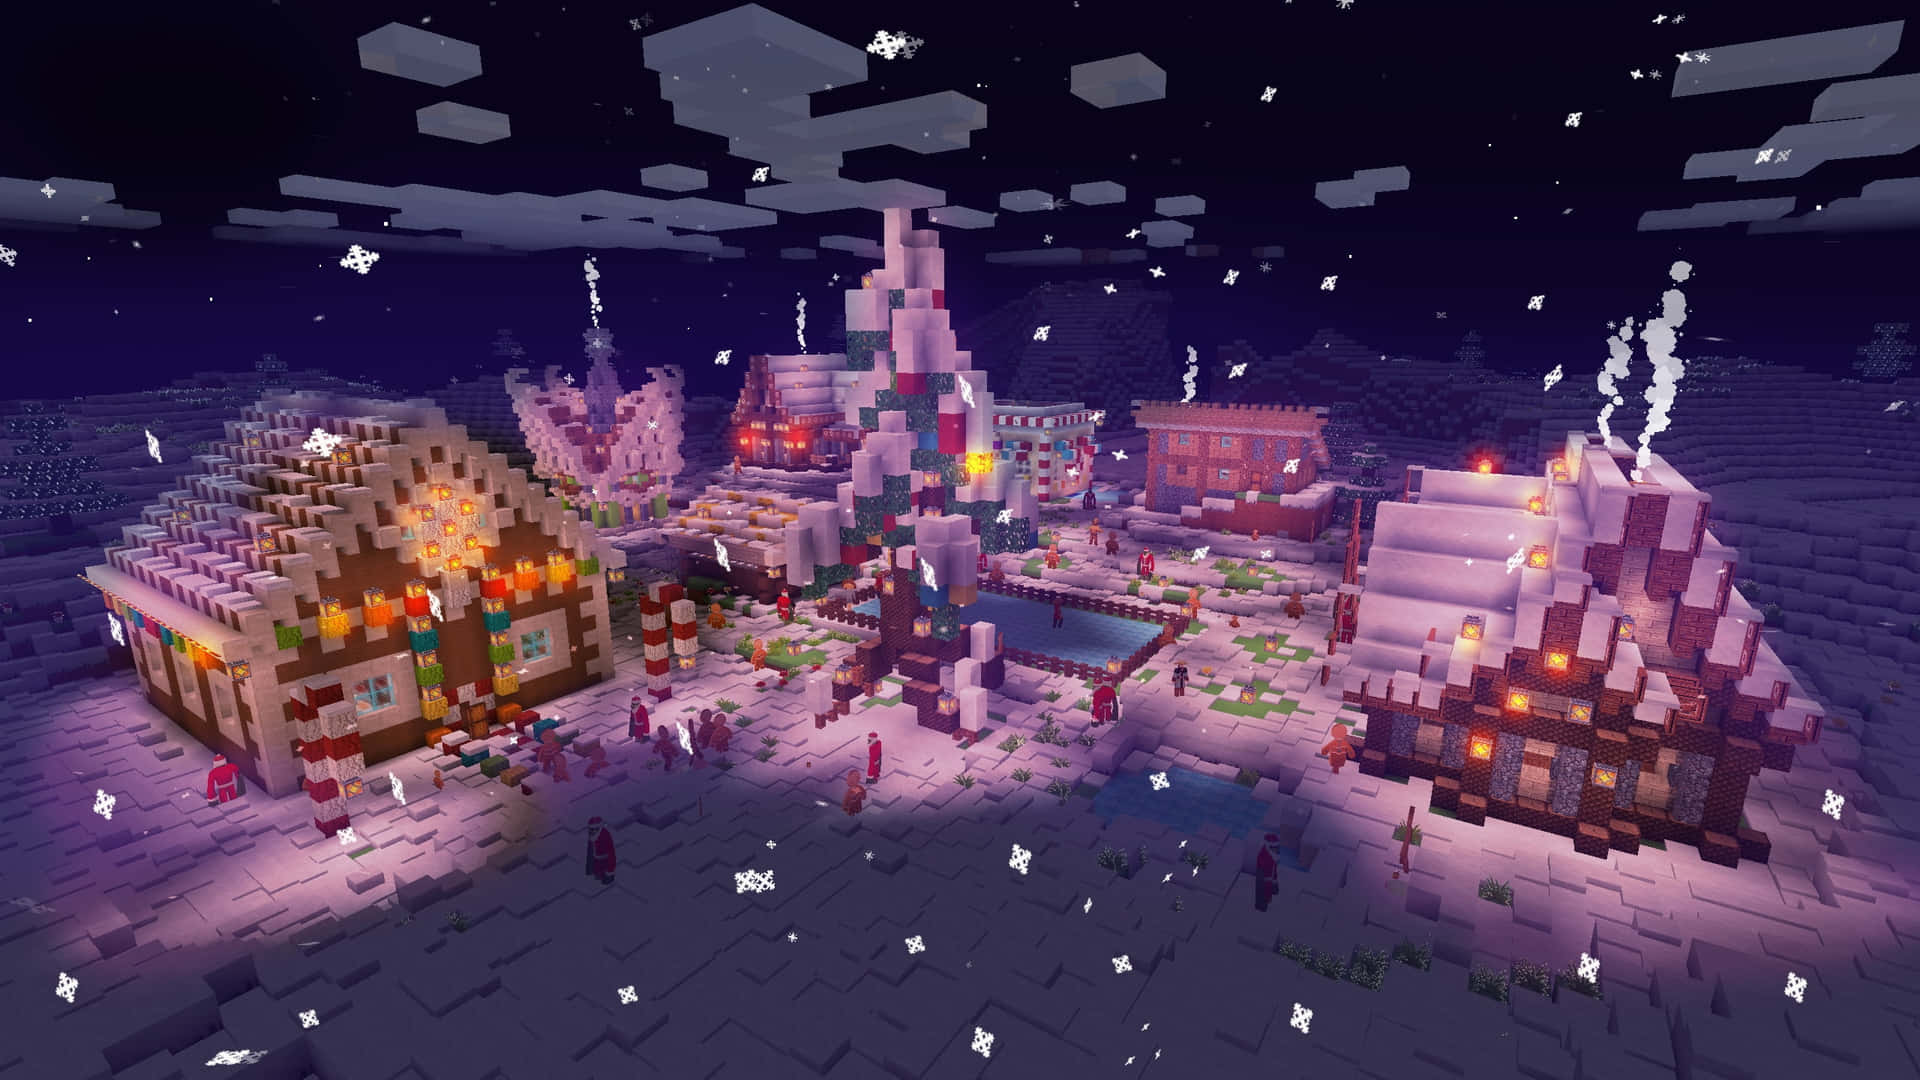 Beautiful Minecraft Village at Sunset Wallpaper